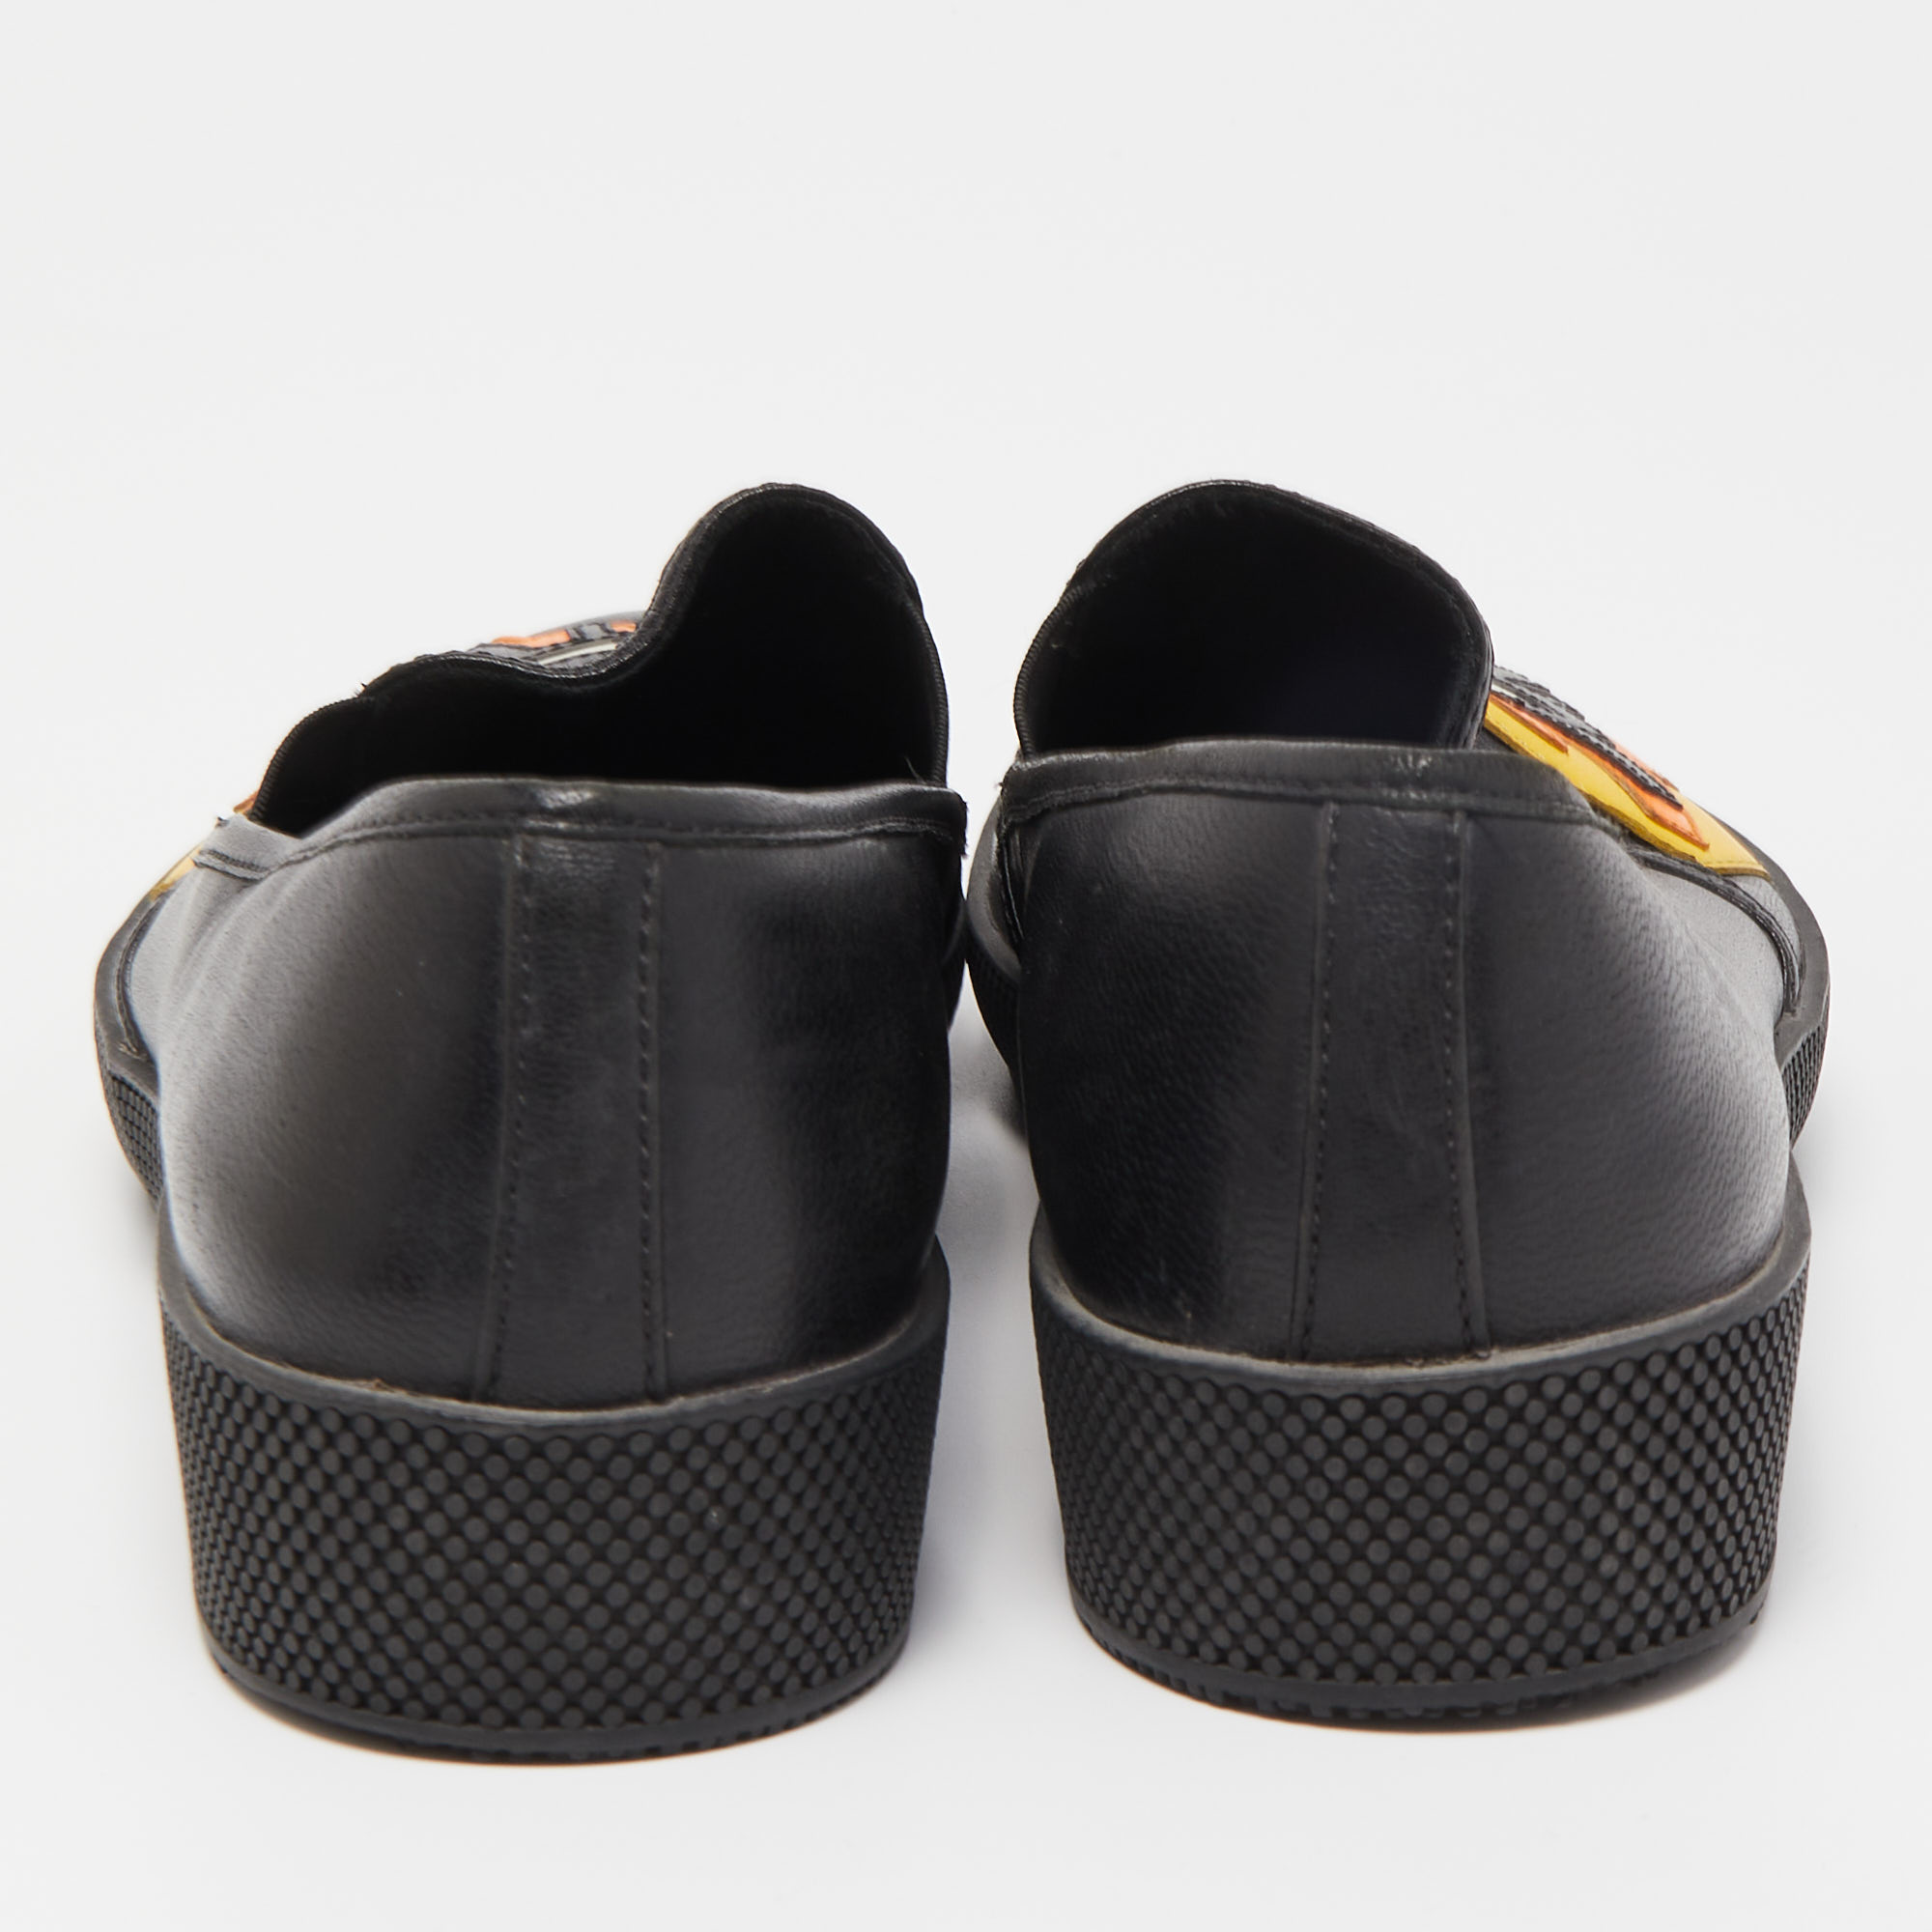 Prada Black Leather Smoking Slippers Size 37.5